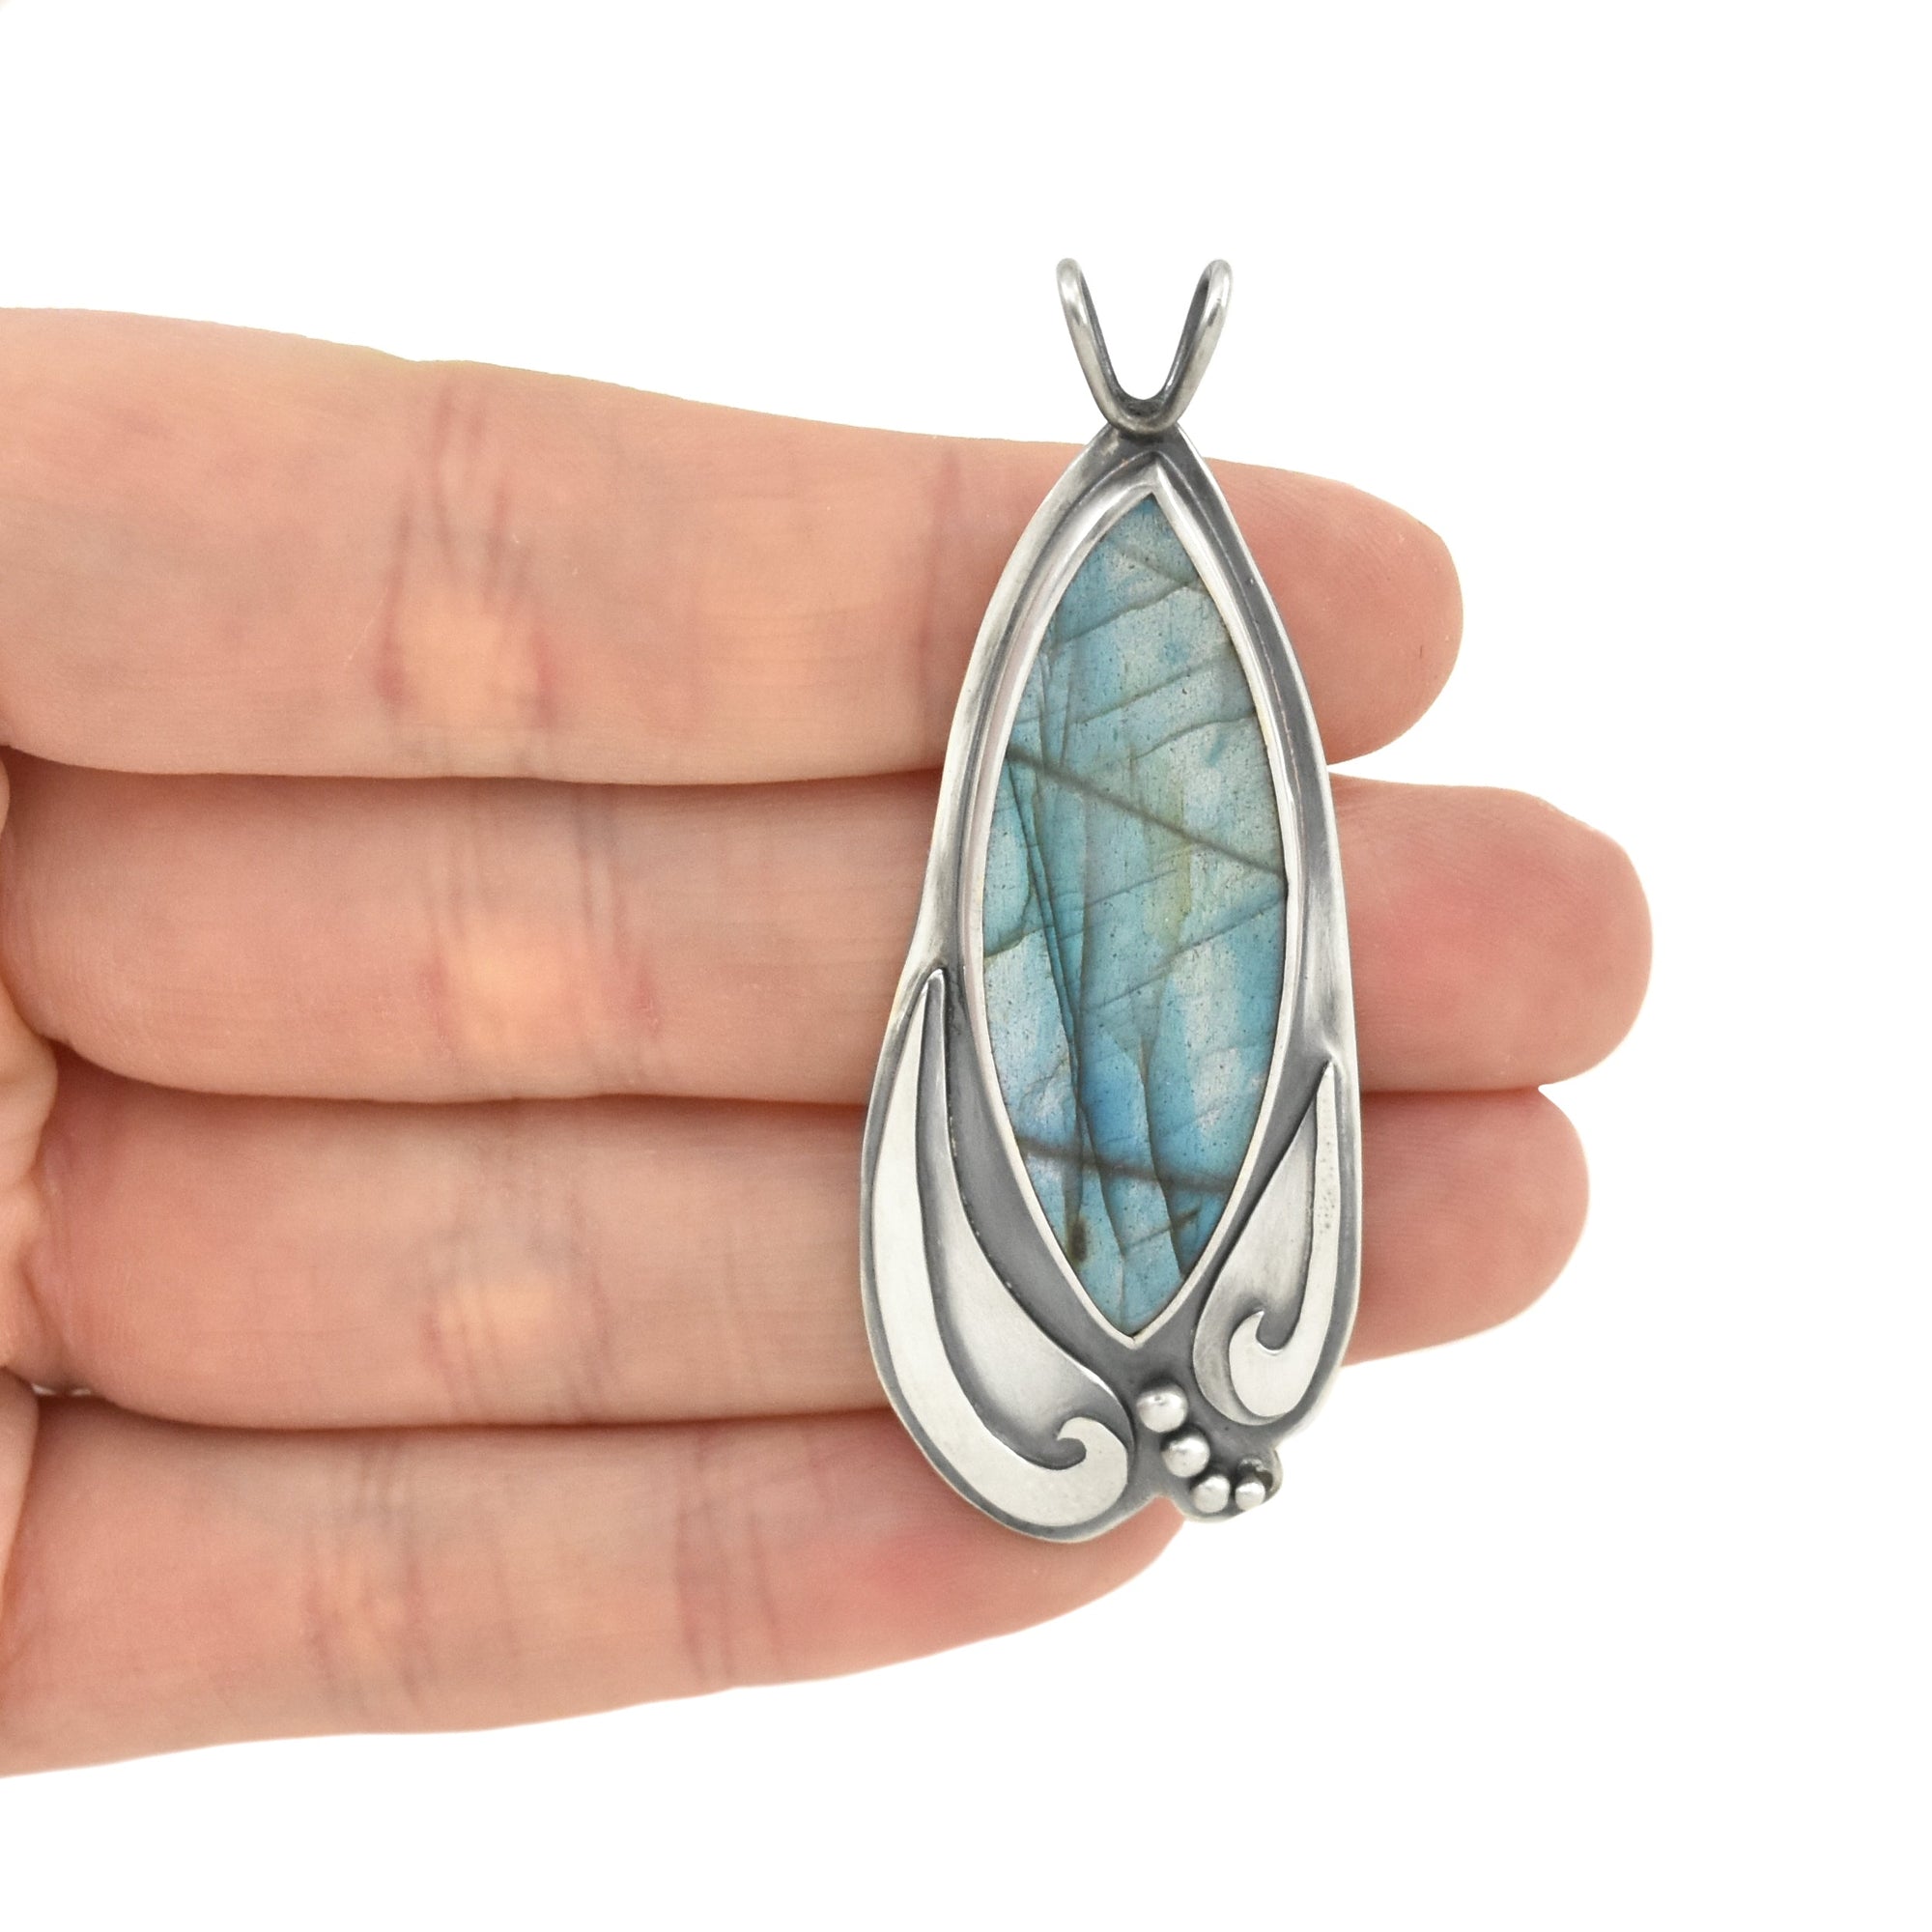 Superior Gales Labradorite Wonderland Pendant No. 2, Silver Pendant handmade by Beth Millner Jewelry